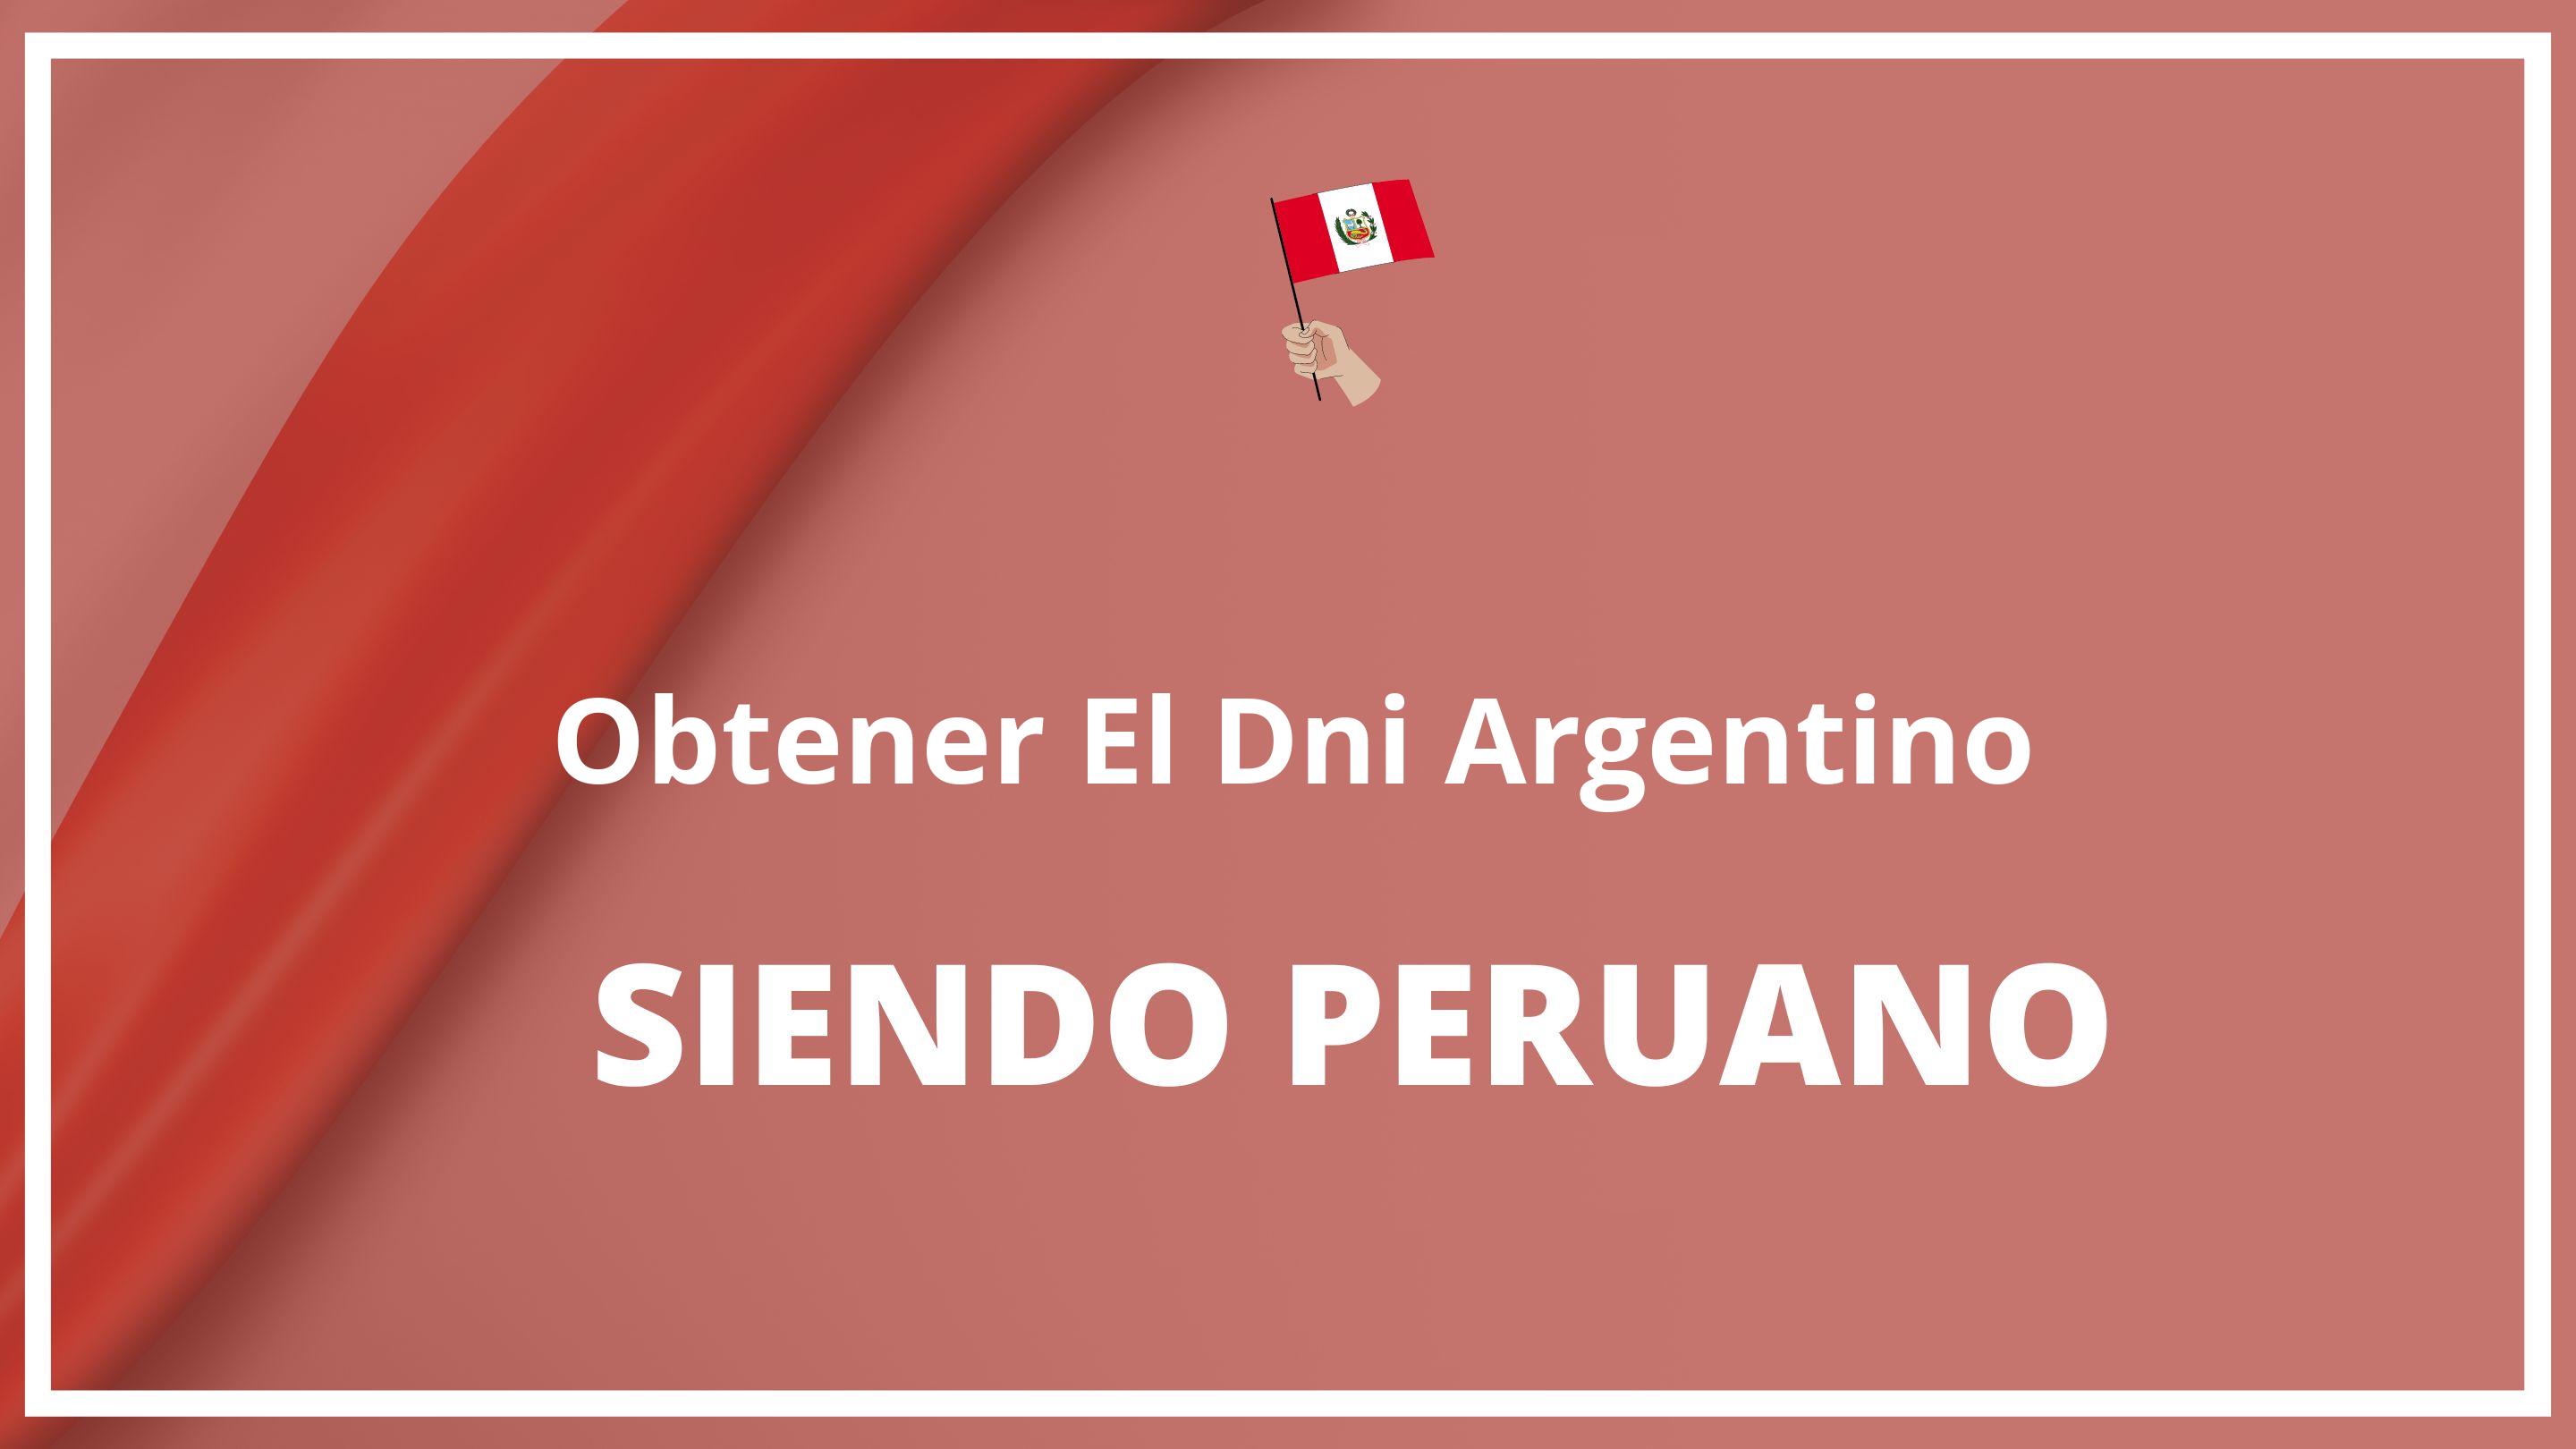 Como obtener el dni argentino siendo peruano